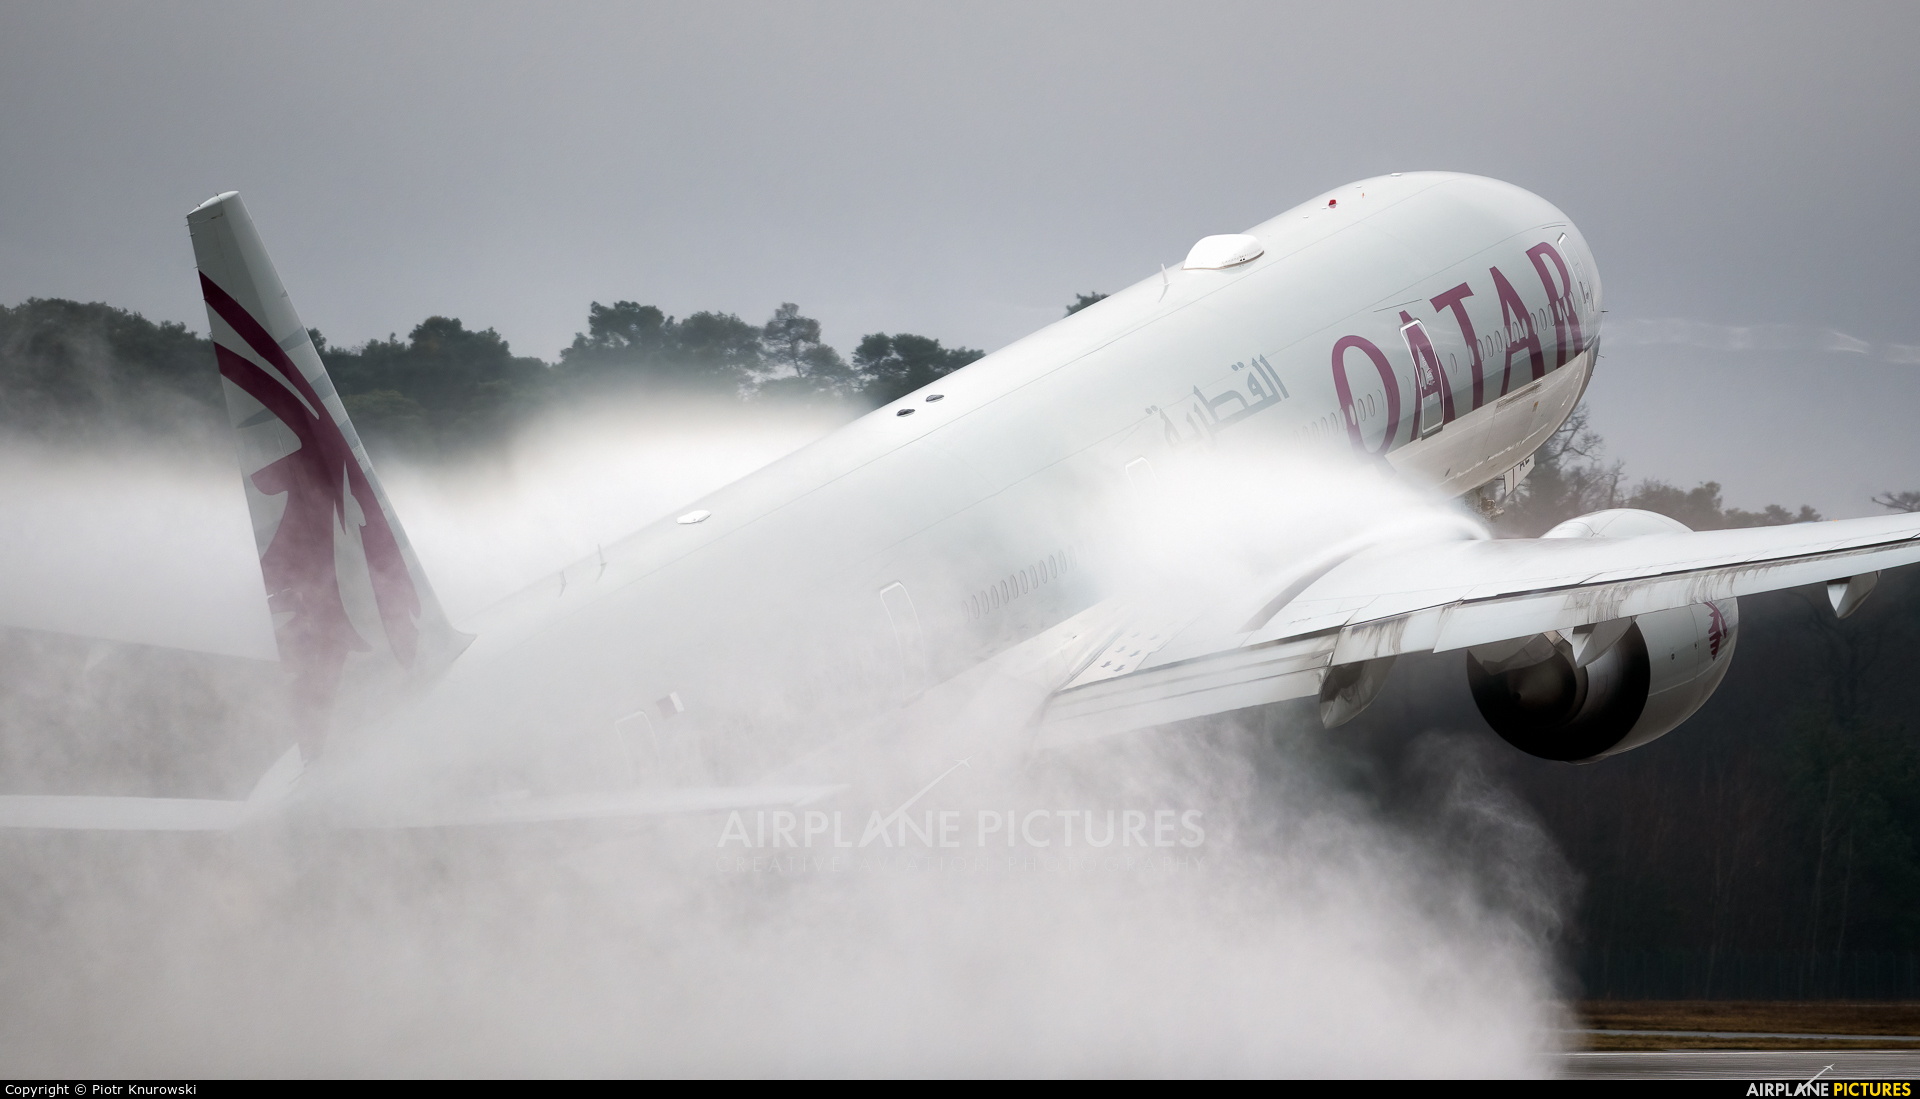 Qatar Airways A7-BAE aircraft at Frankfurt